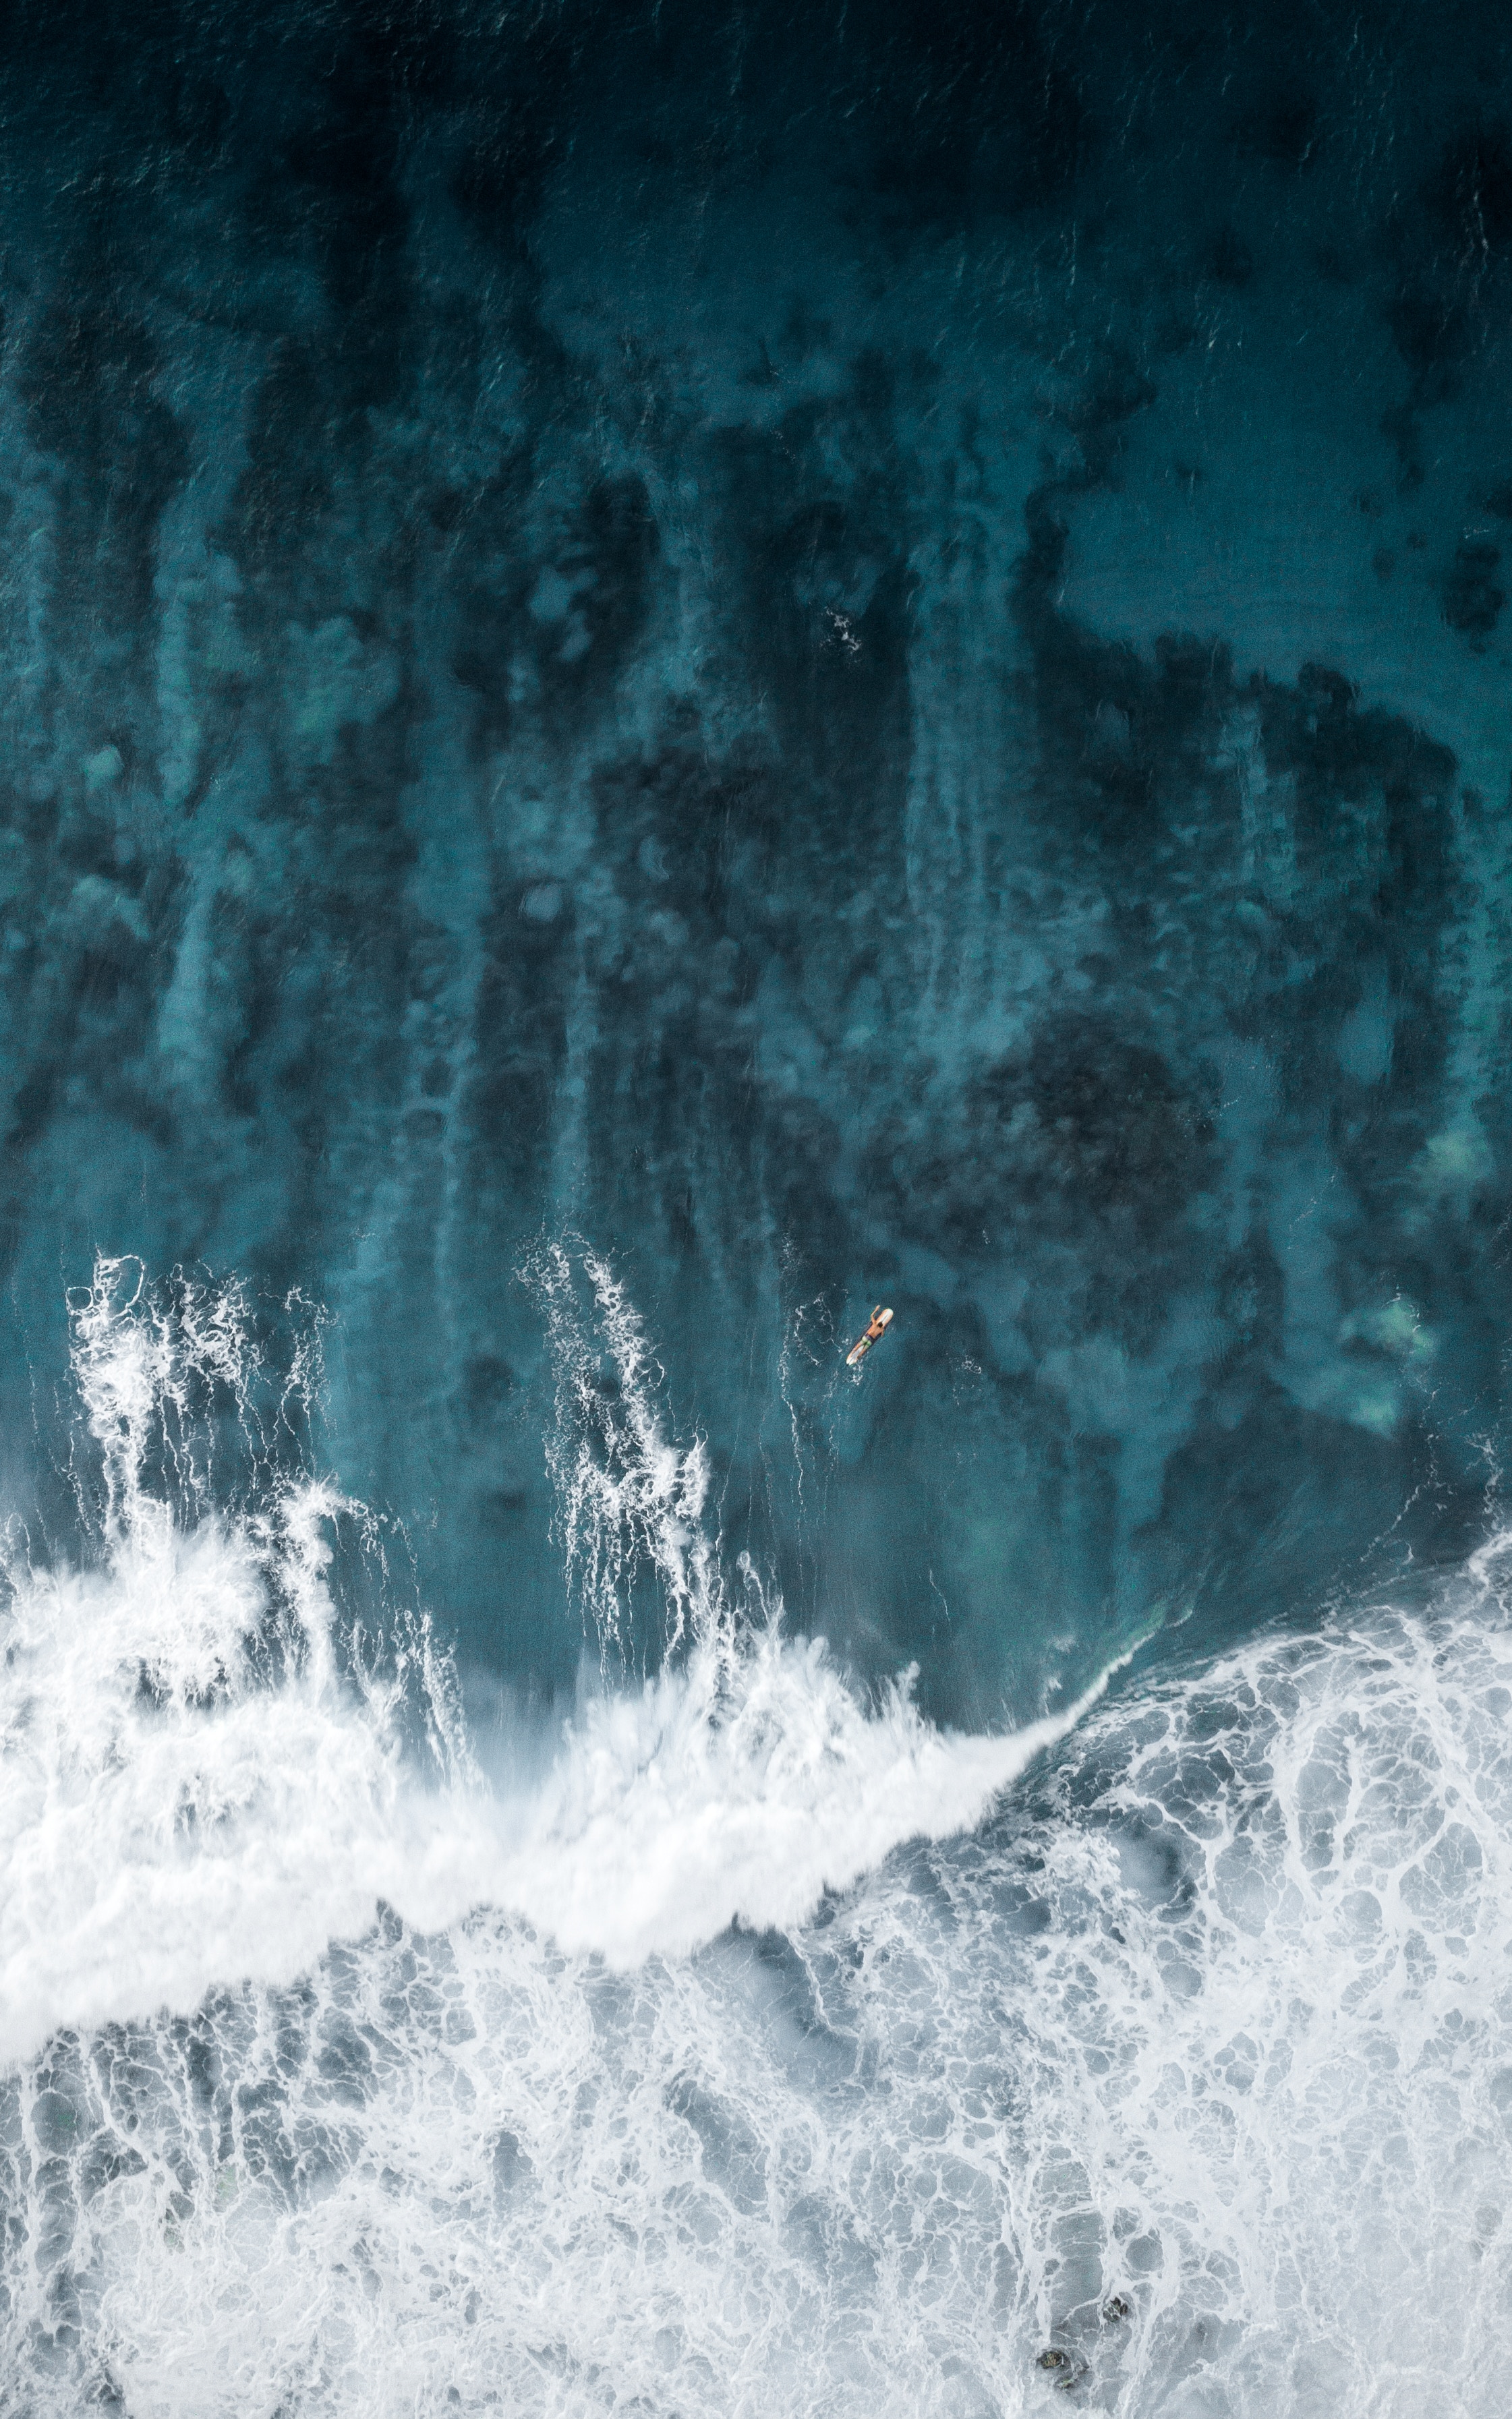 104358 descargar imagen naturaleza, agua, ondas, vista desde arriba, oceano, océano, superficie, tablista, surfista: fondos de pantalla y protectores de pantalla gratis